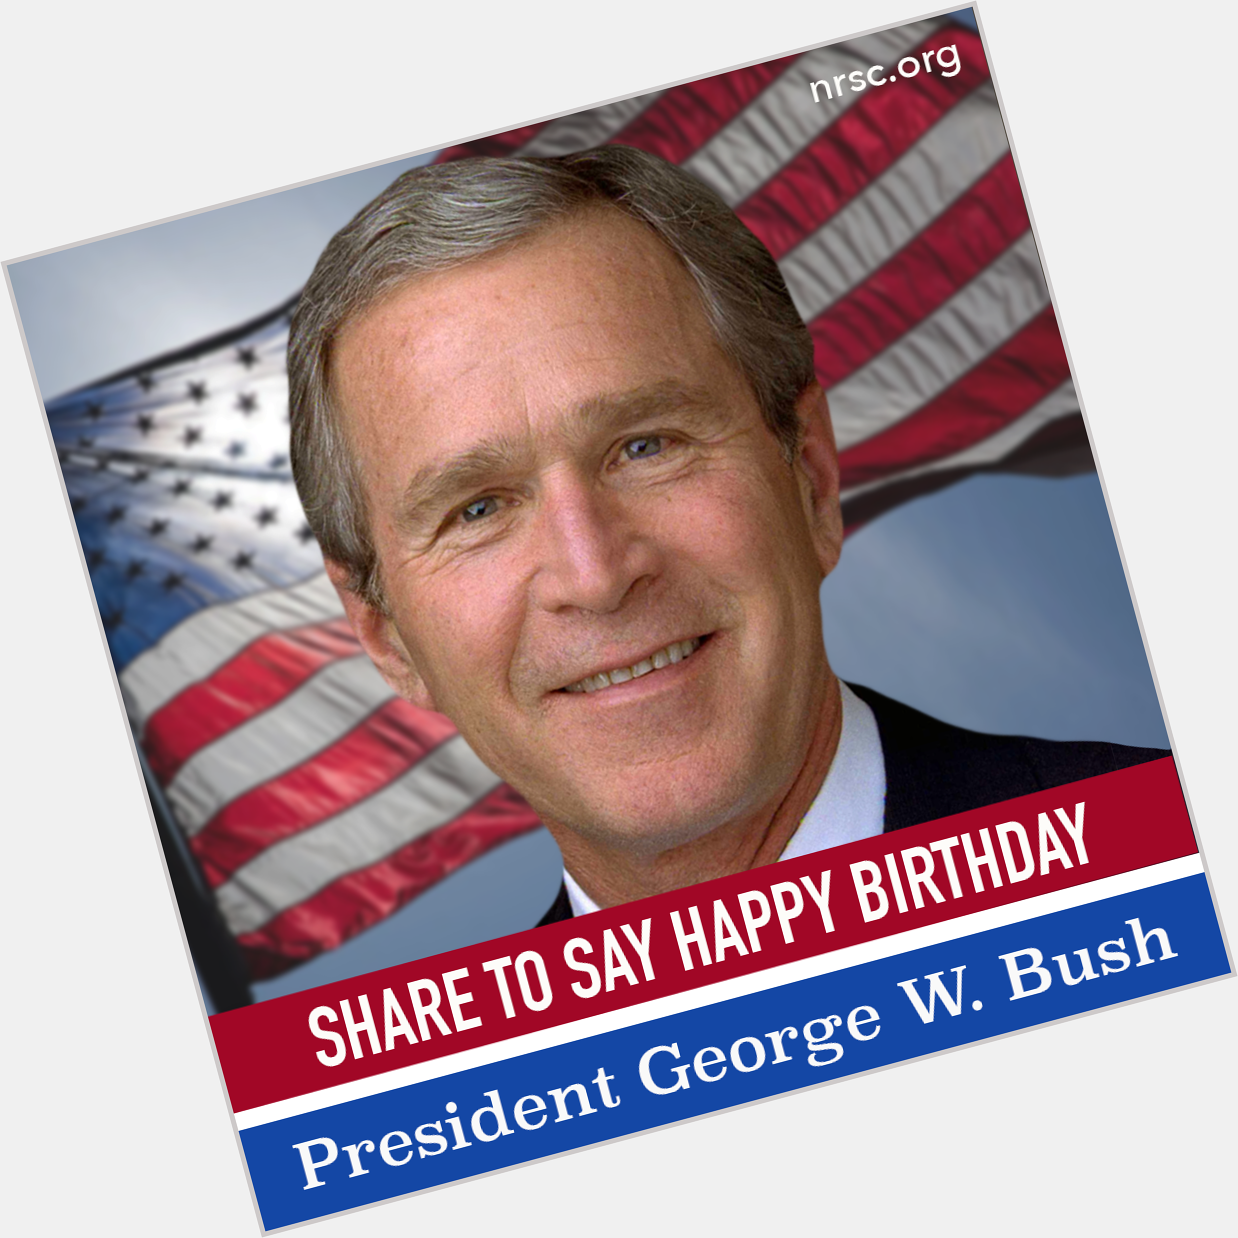 To say Happy 69th Birthday to George W. Bush! 